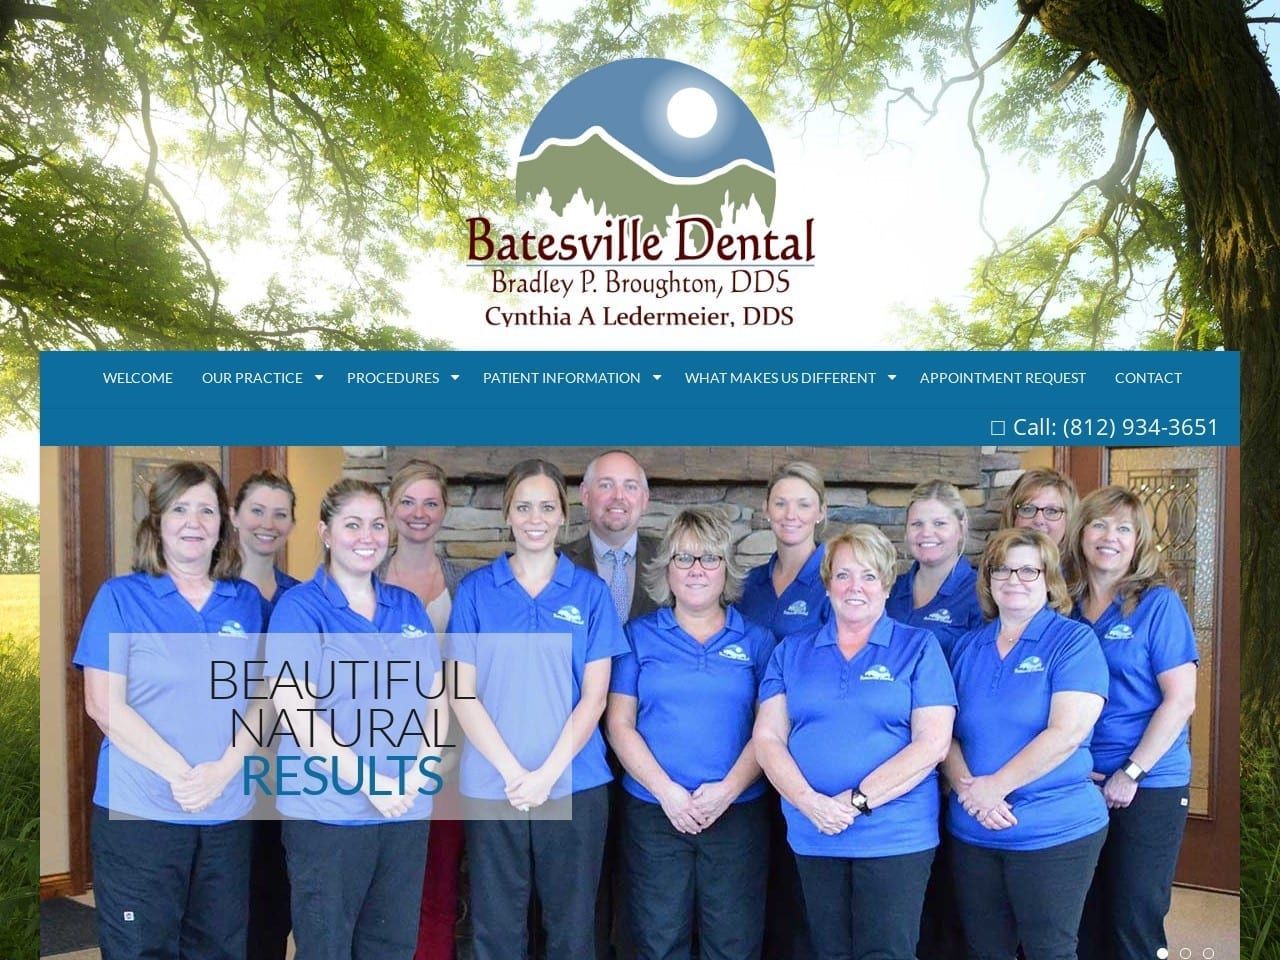 Batesville Dental Website Screenshot from batesvilledental.com